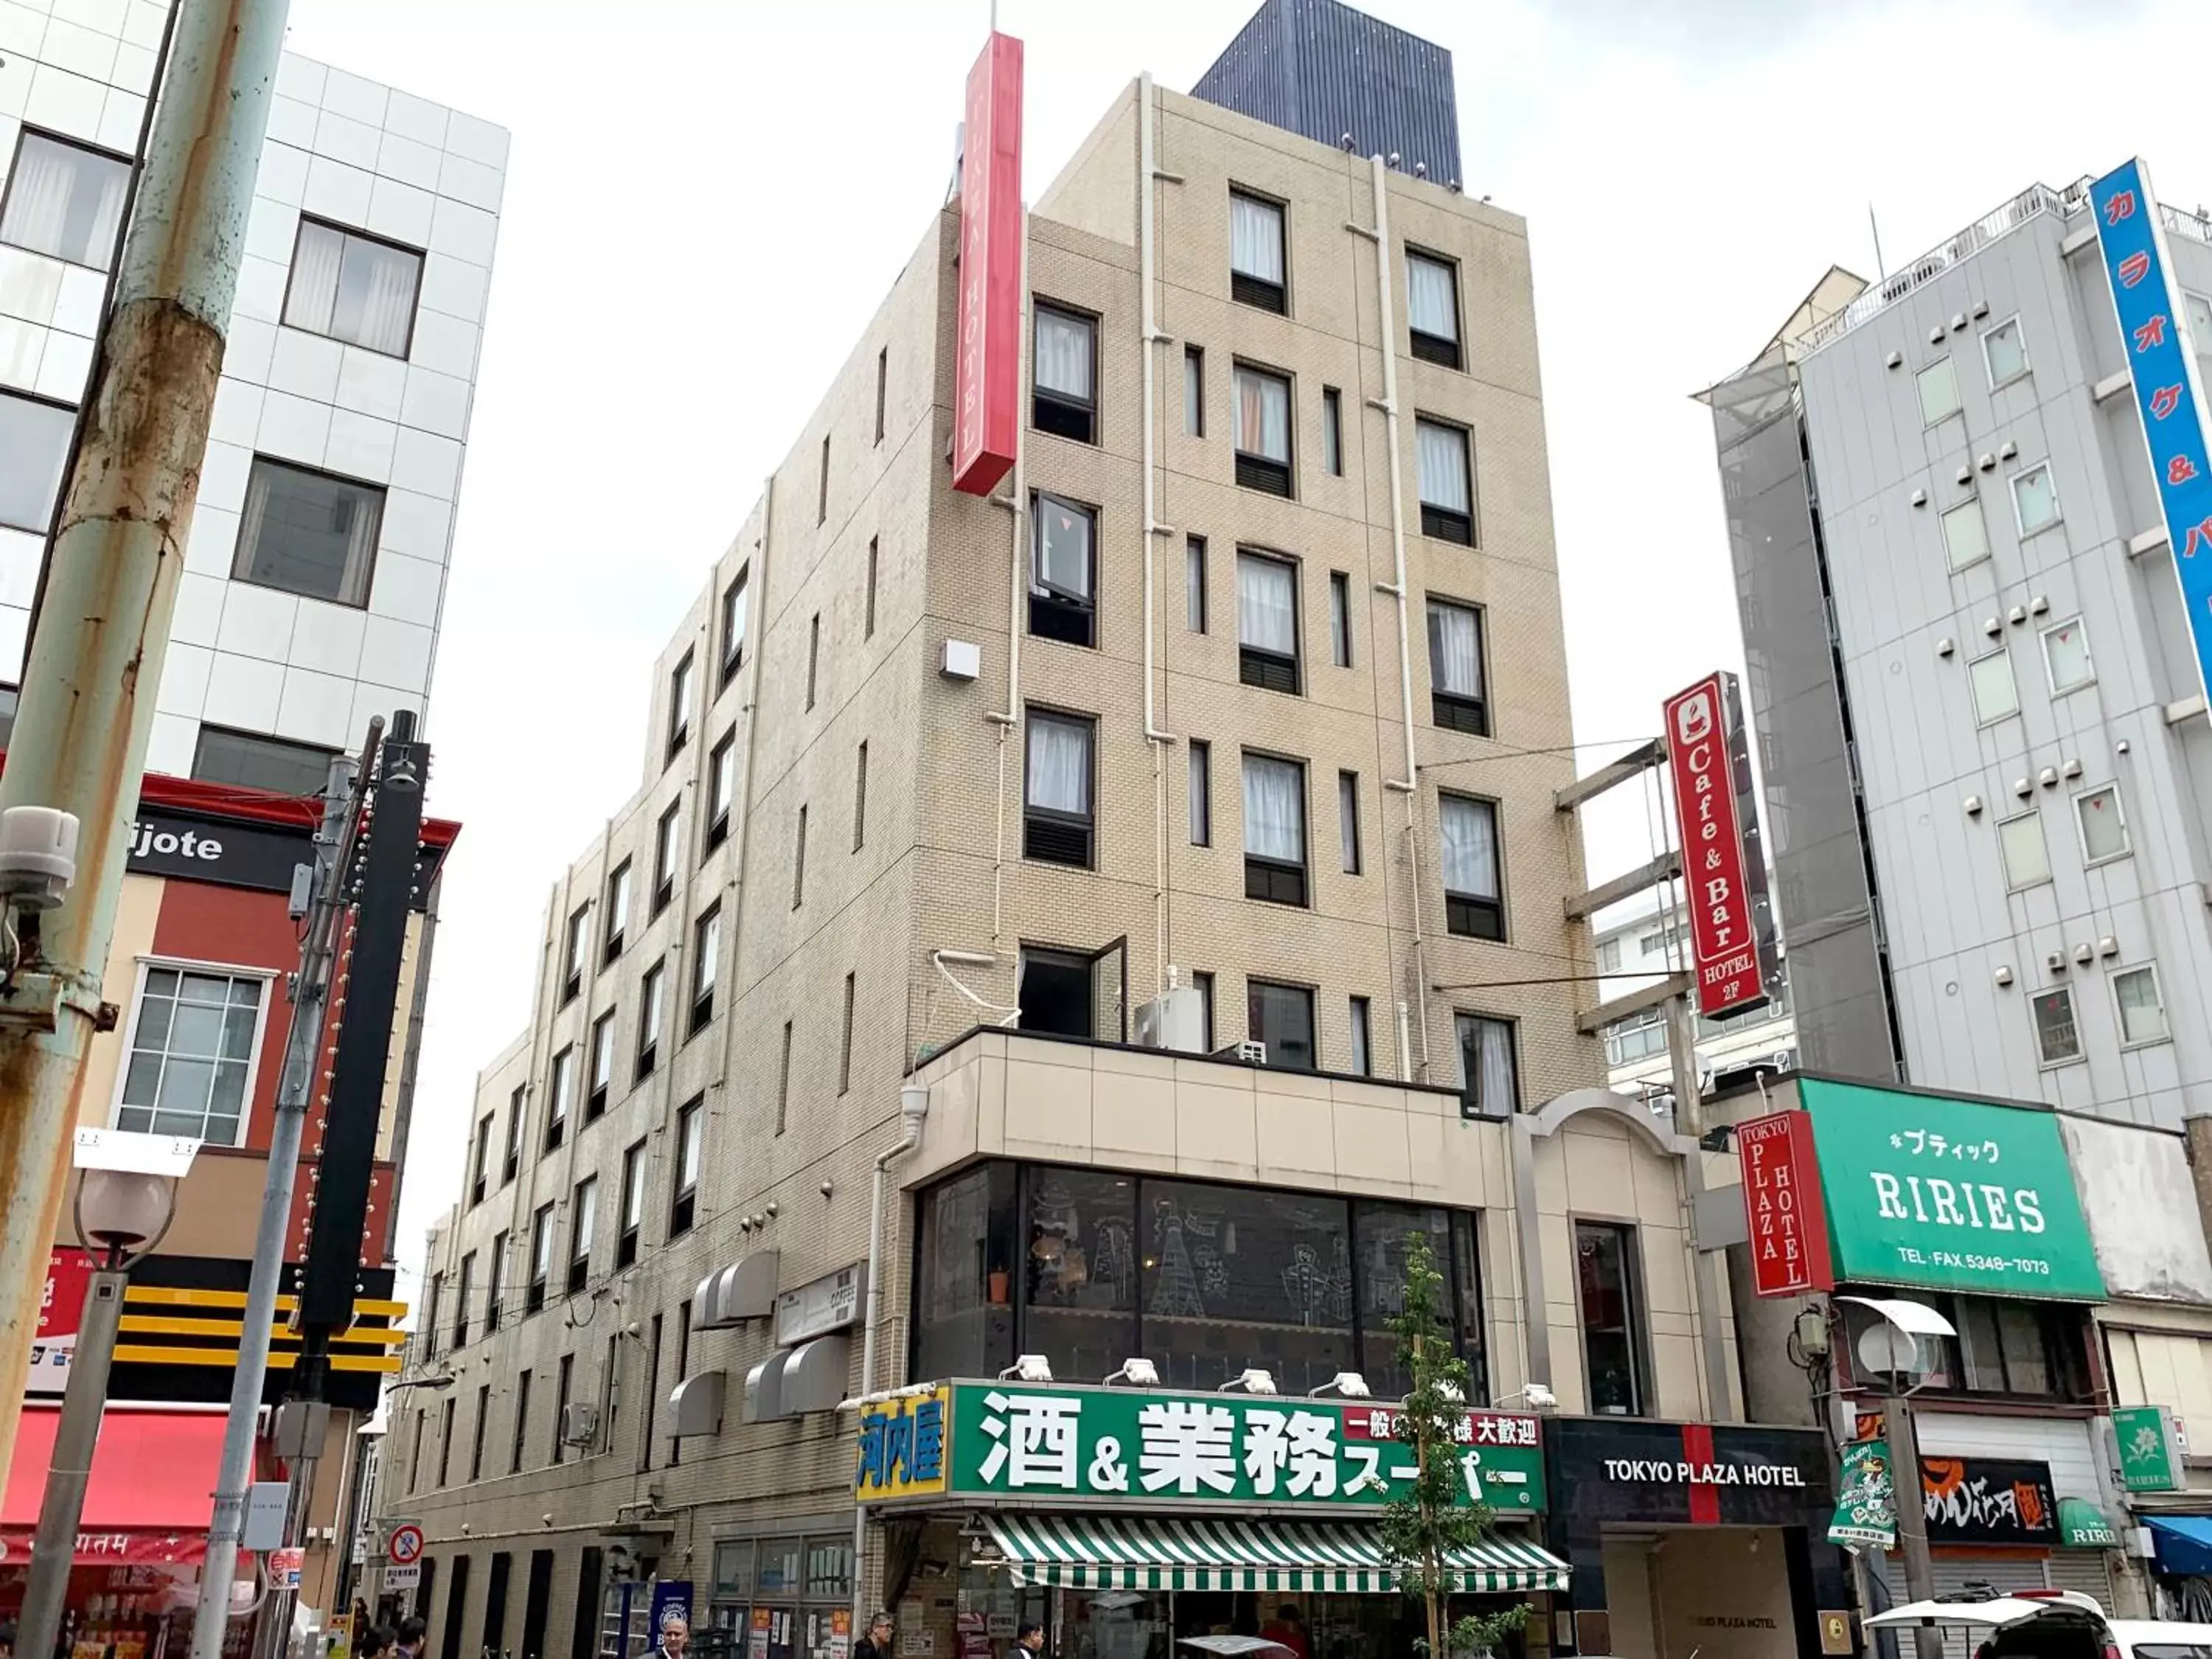 Property building in Tokyo Plaza Hotel